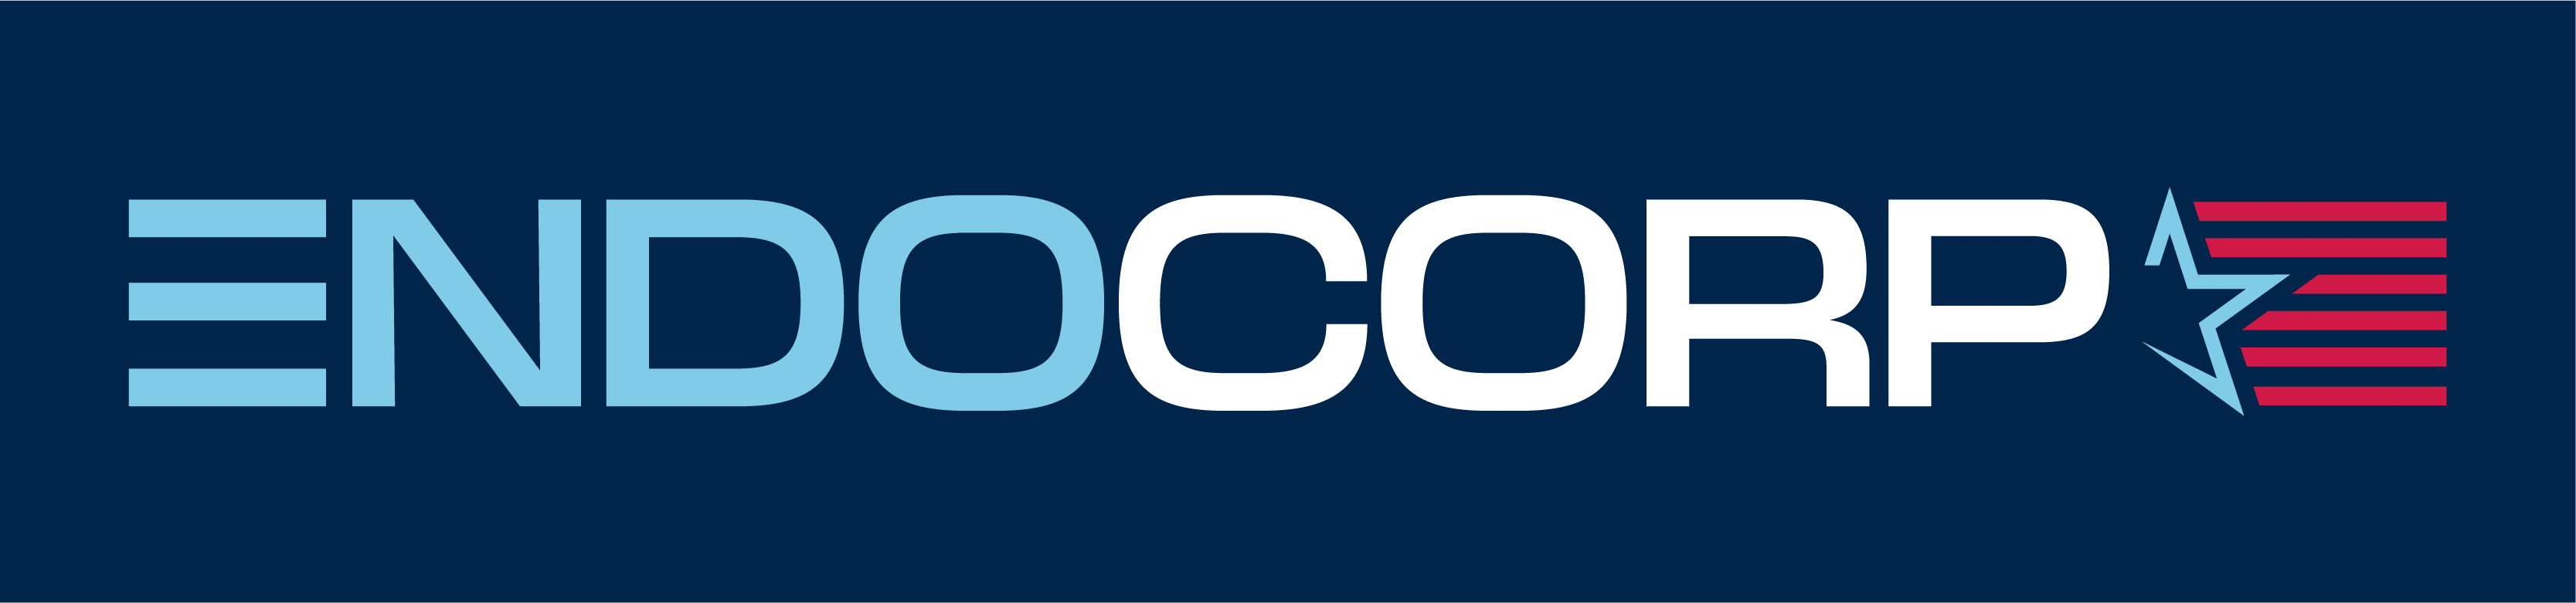 ENDOCORP Logo